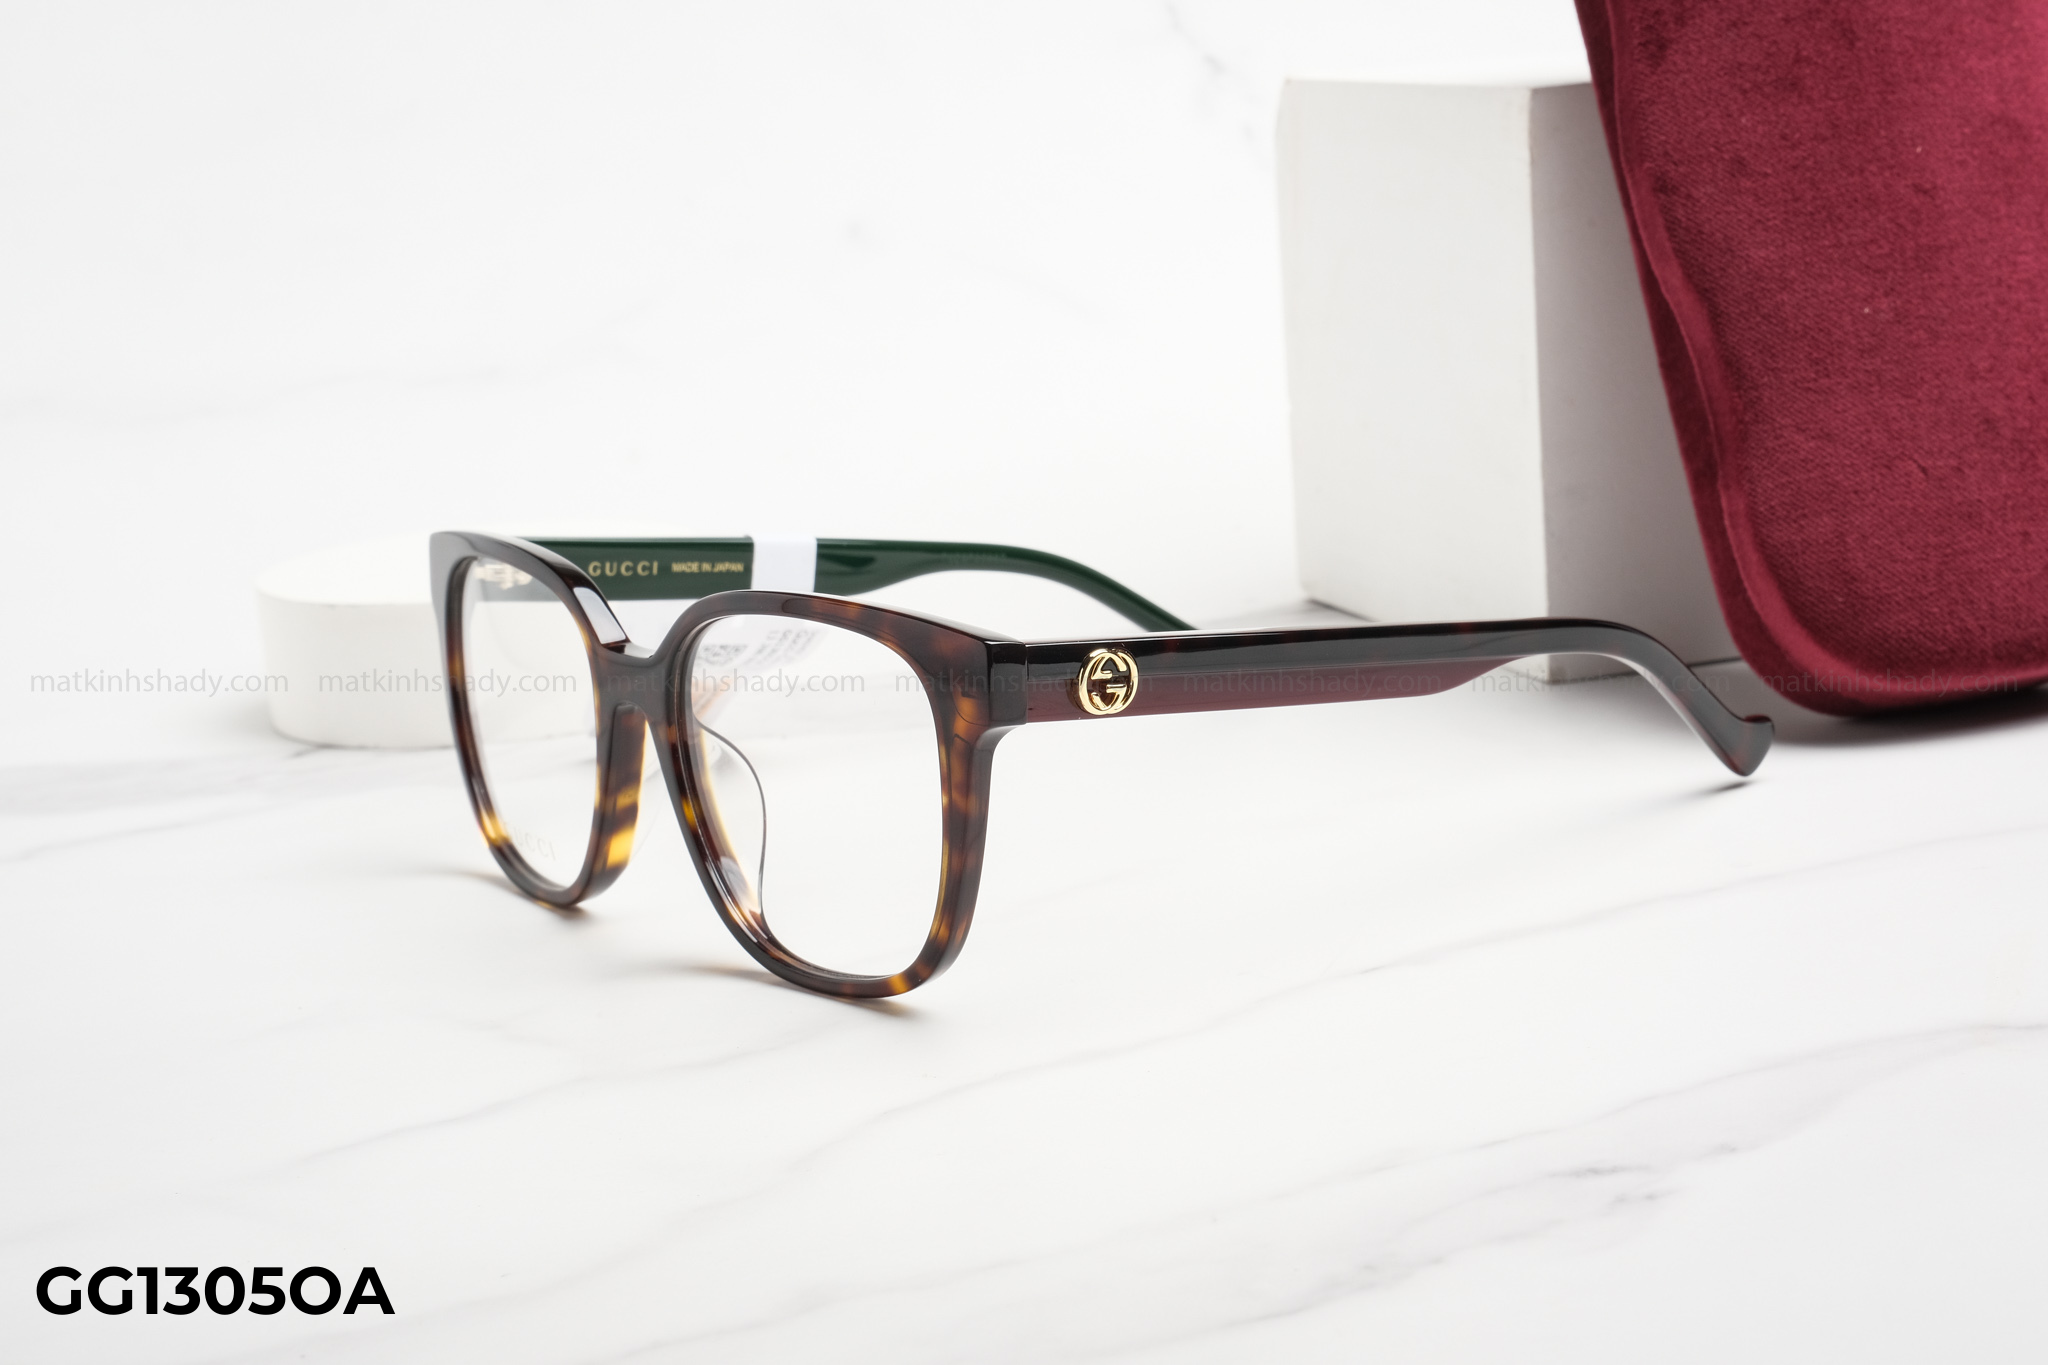  Gucci Eyewear - Glasses - GG1305OA 